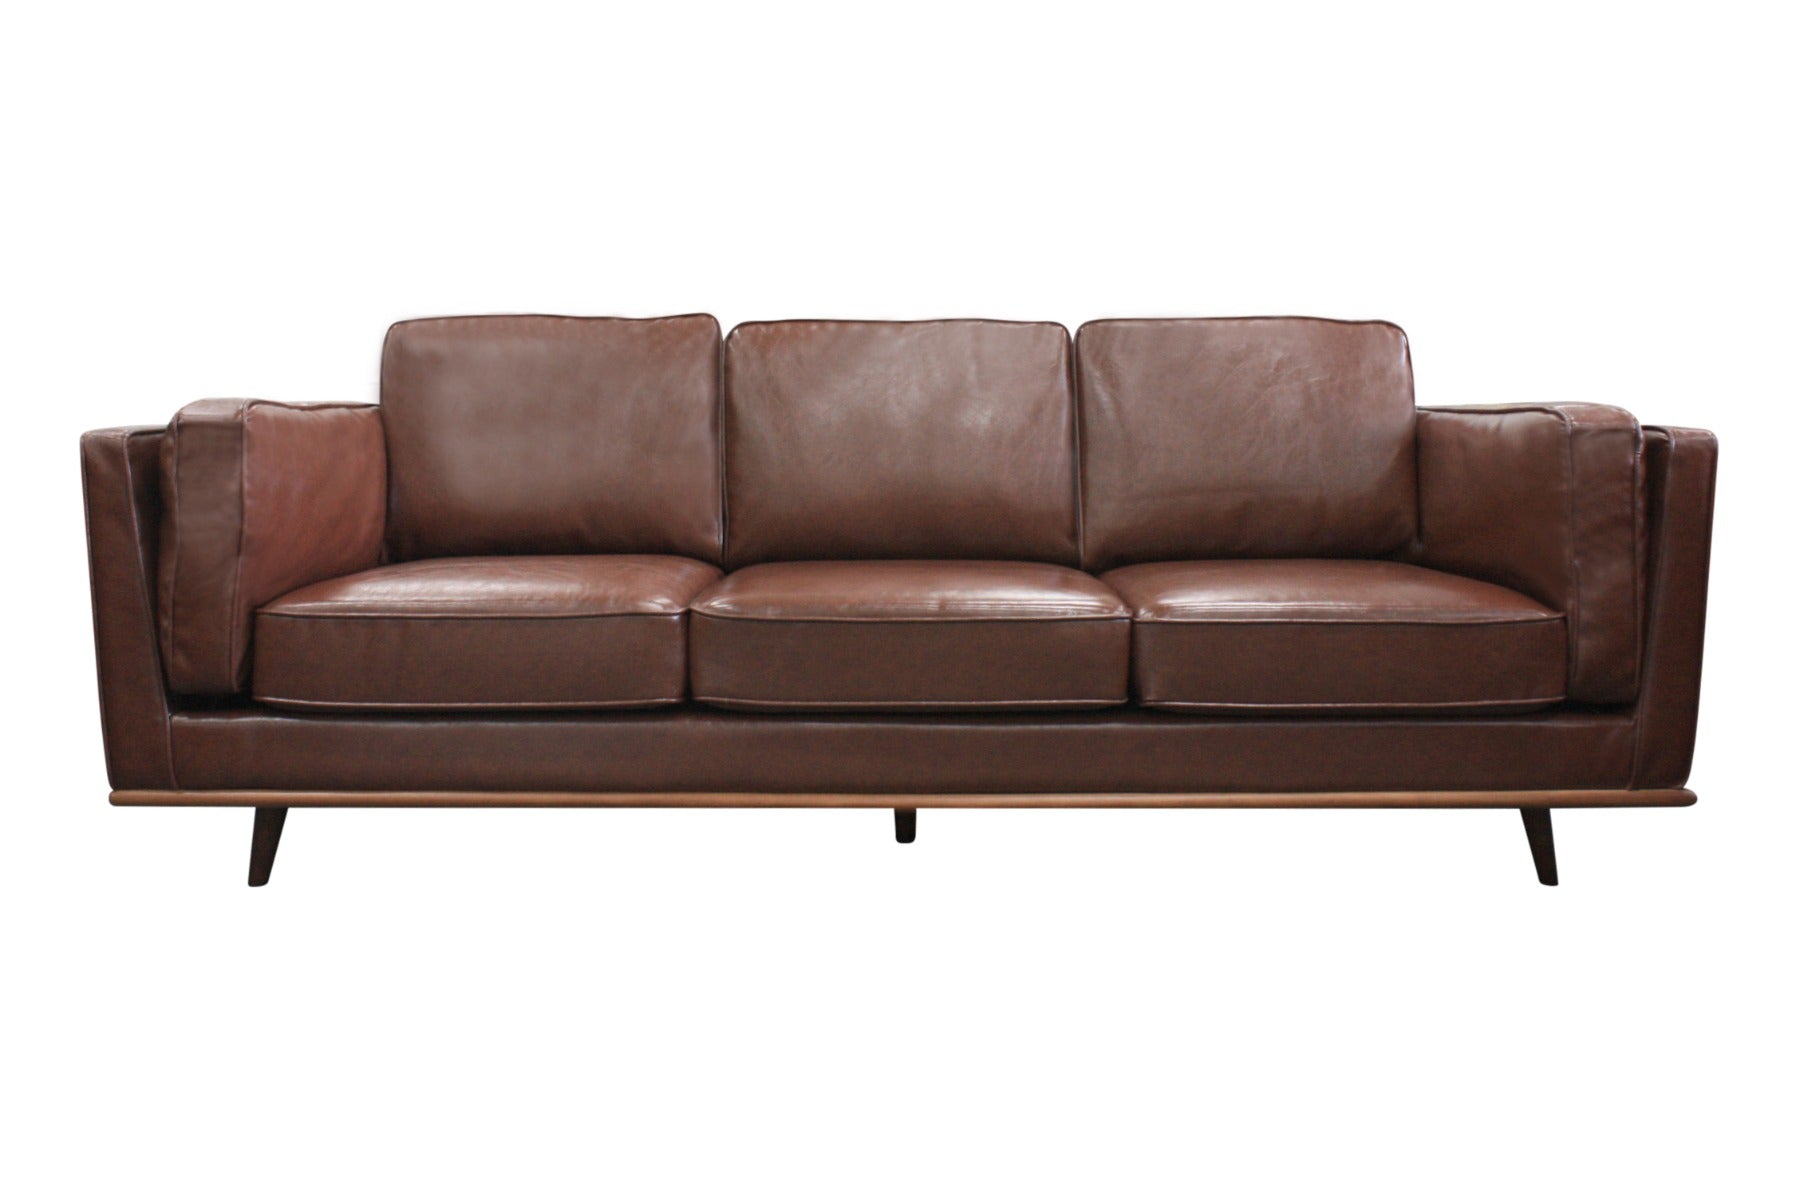 3 Seater Stylish Leatherette Brown York Sofa